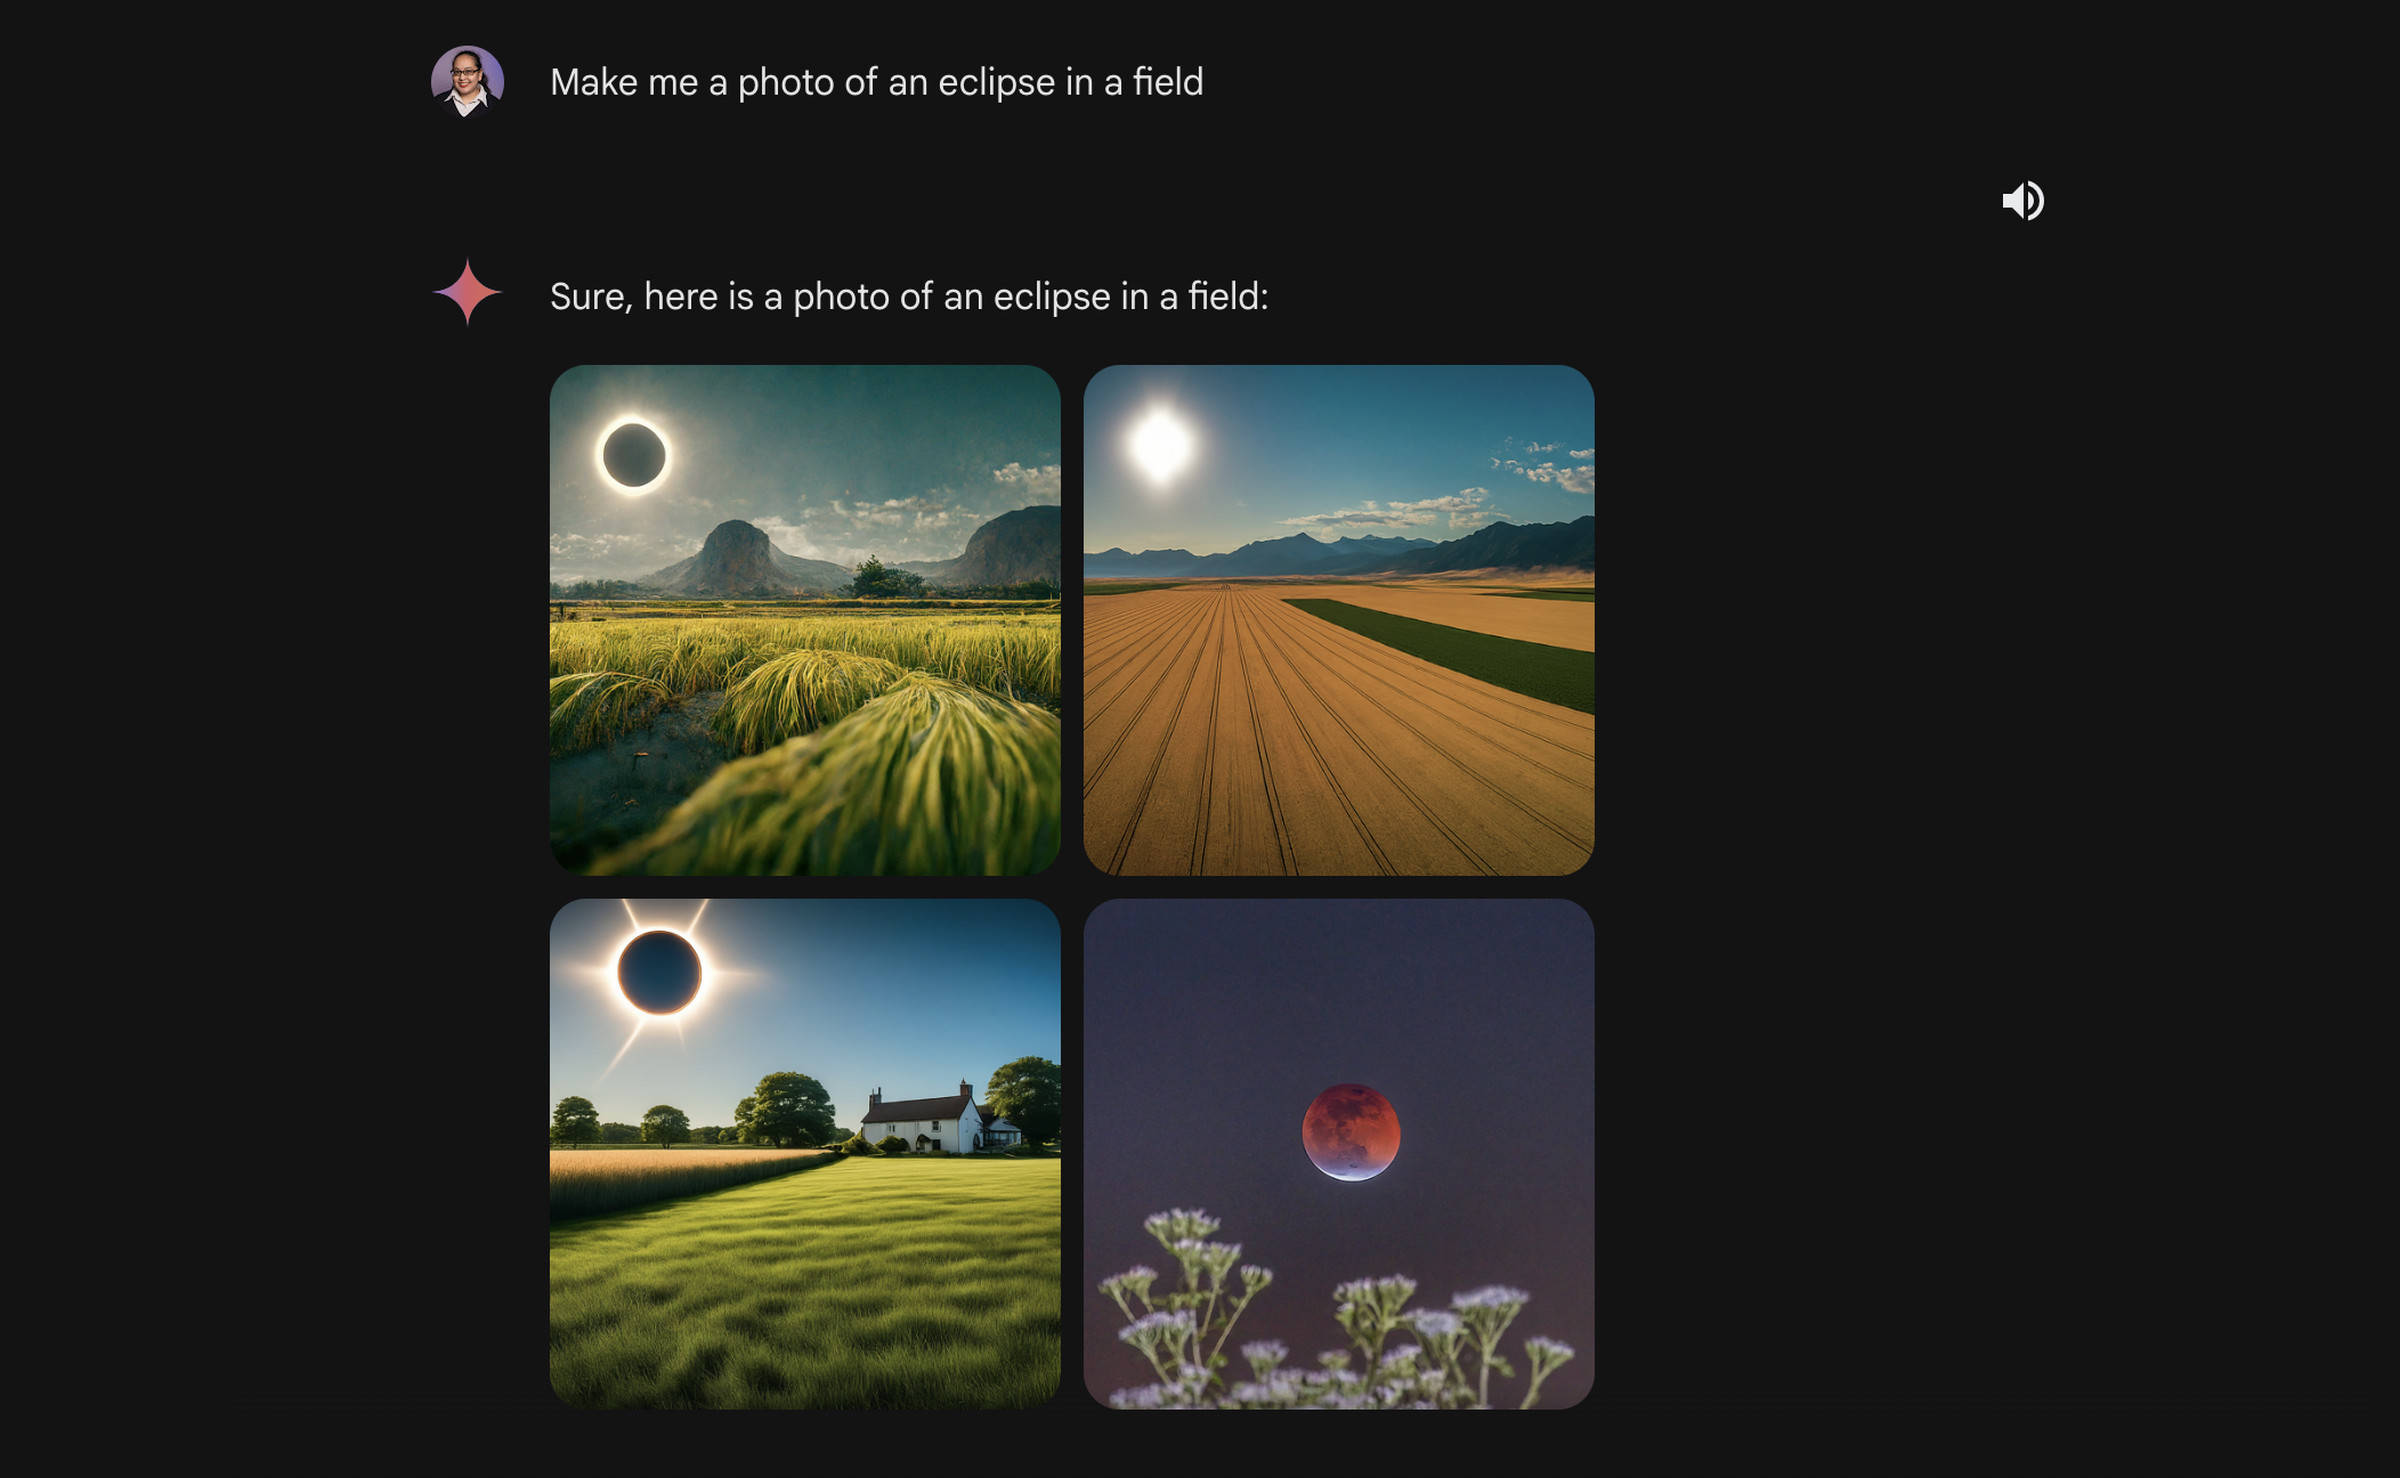 Screenshot of Gemini prompt to generate a photo of the eclipse